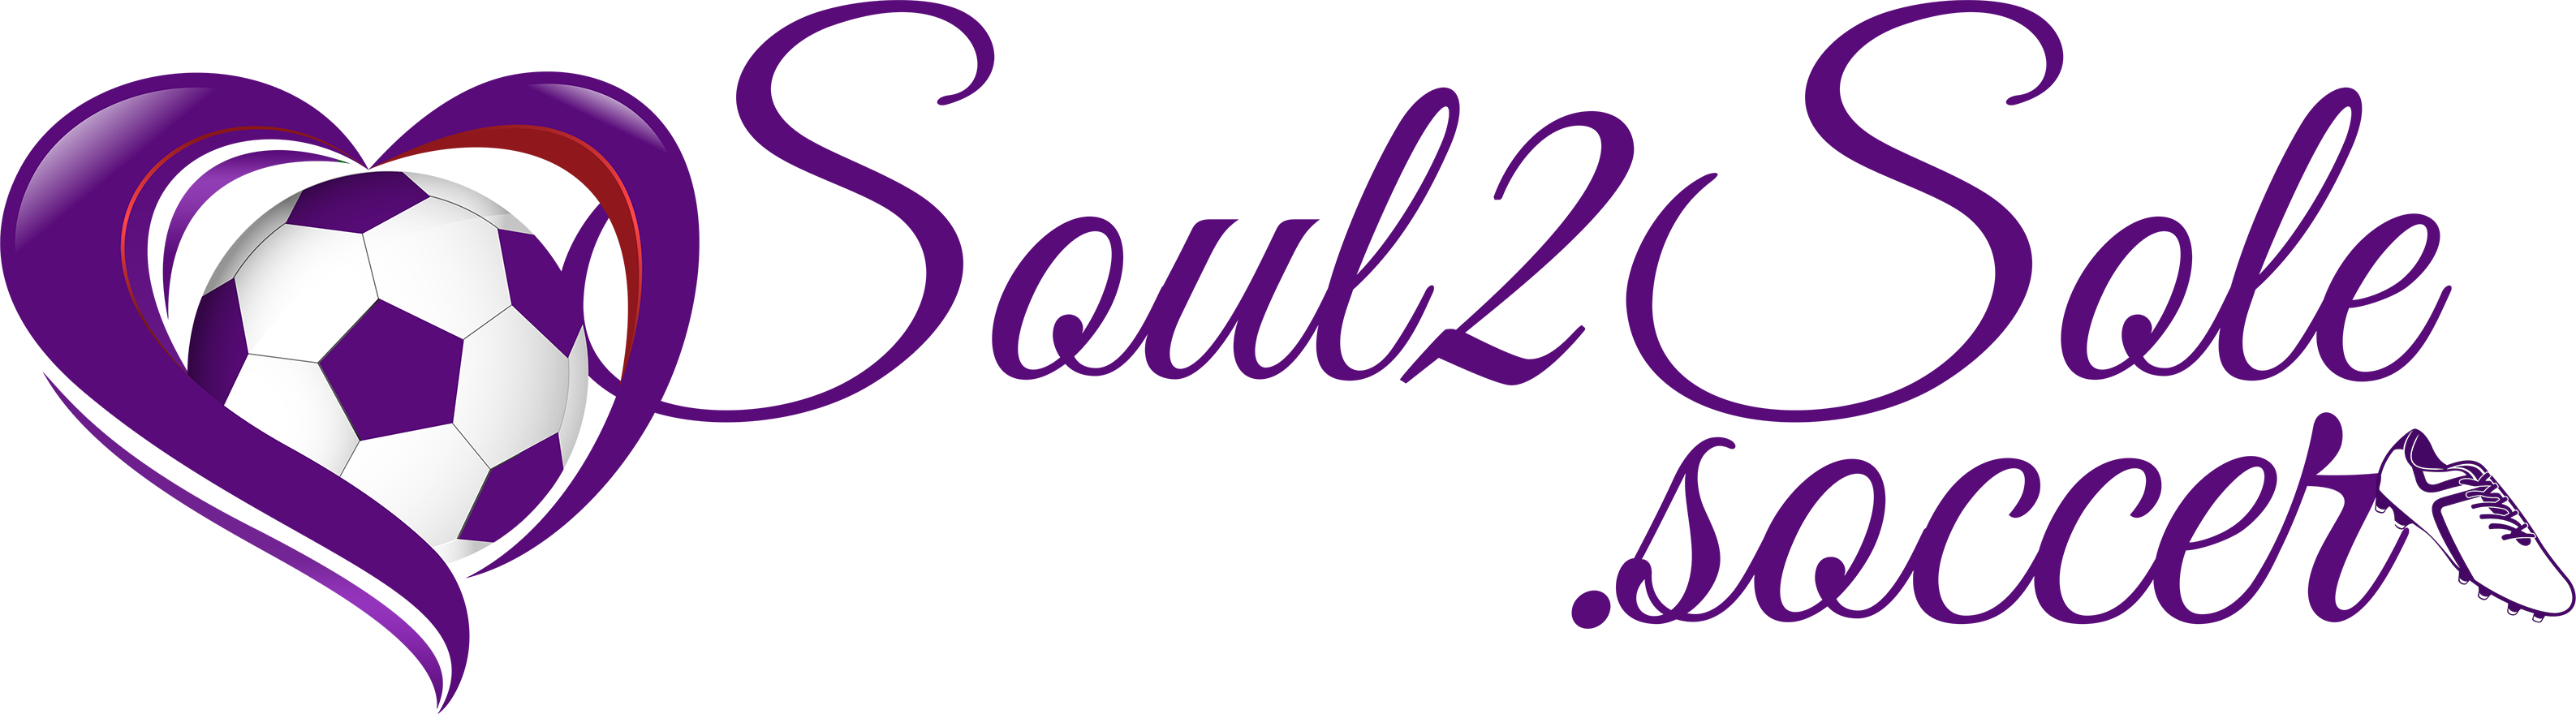 Soul 2 Sole